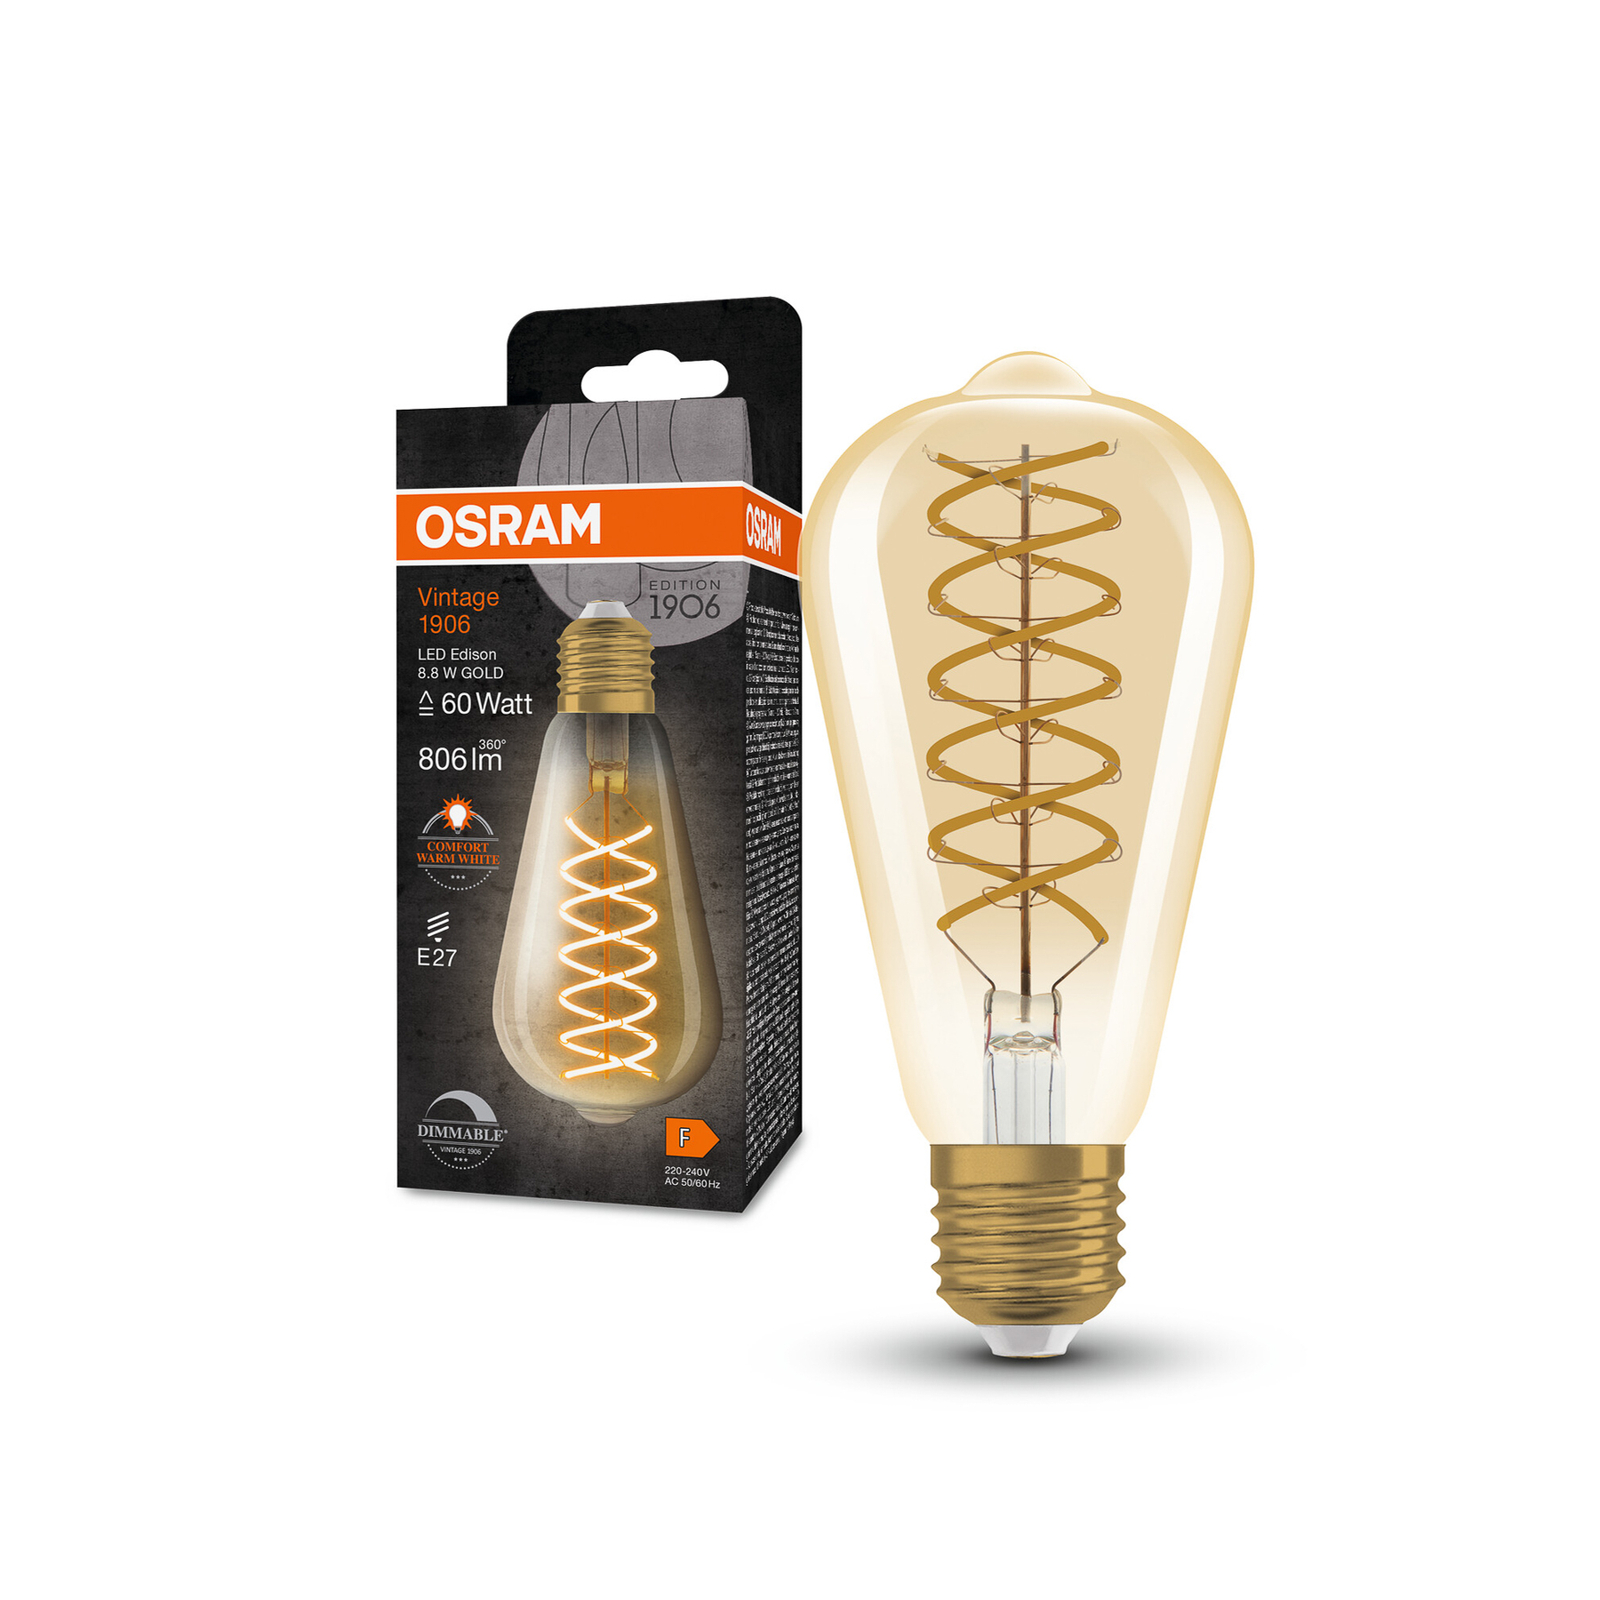 OSRAM LED Vintage 1906 Edison, guld, E27, 8,8 W, 824, dim.